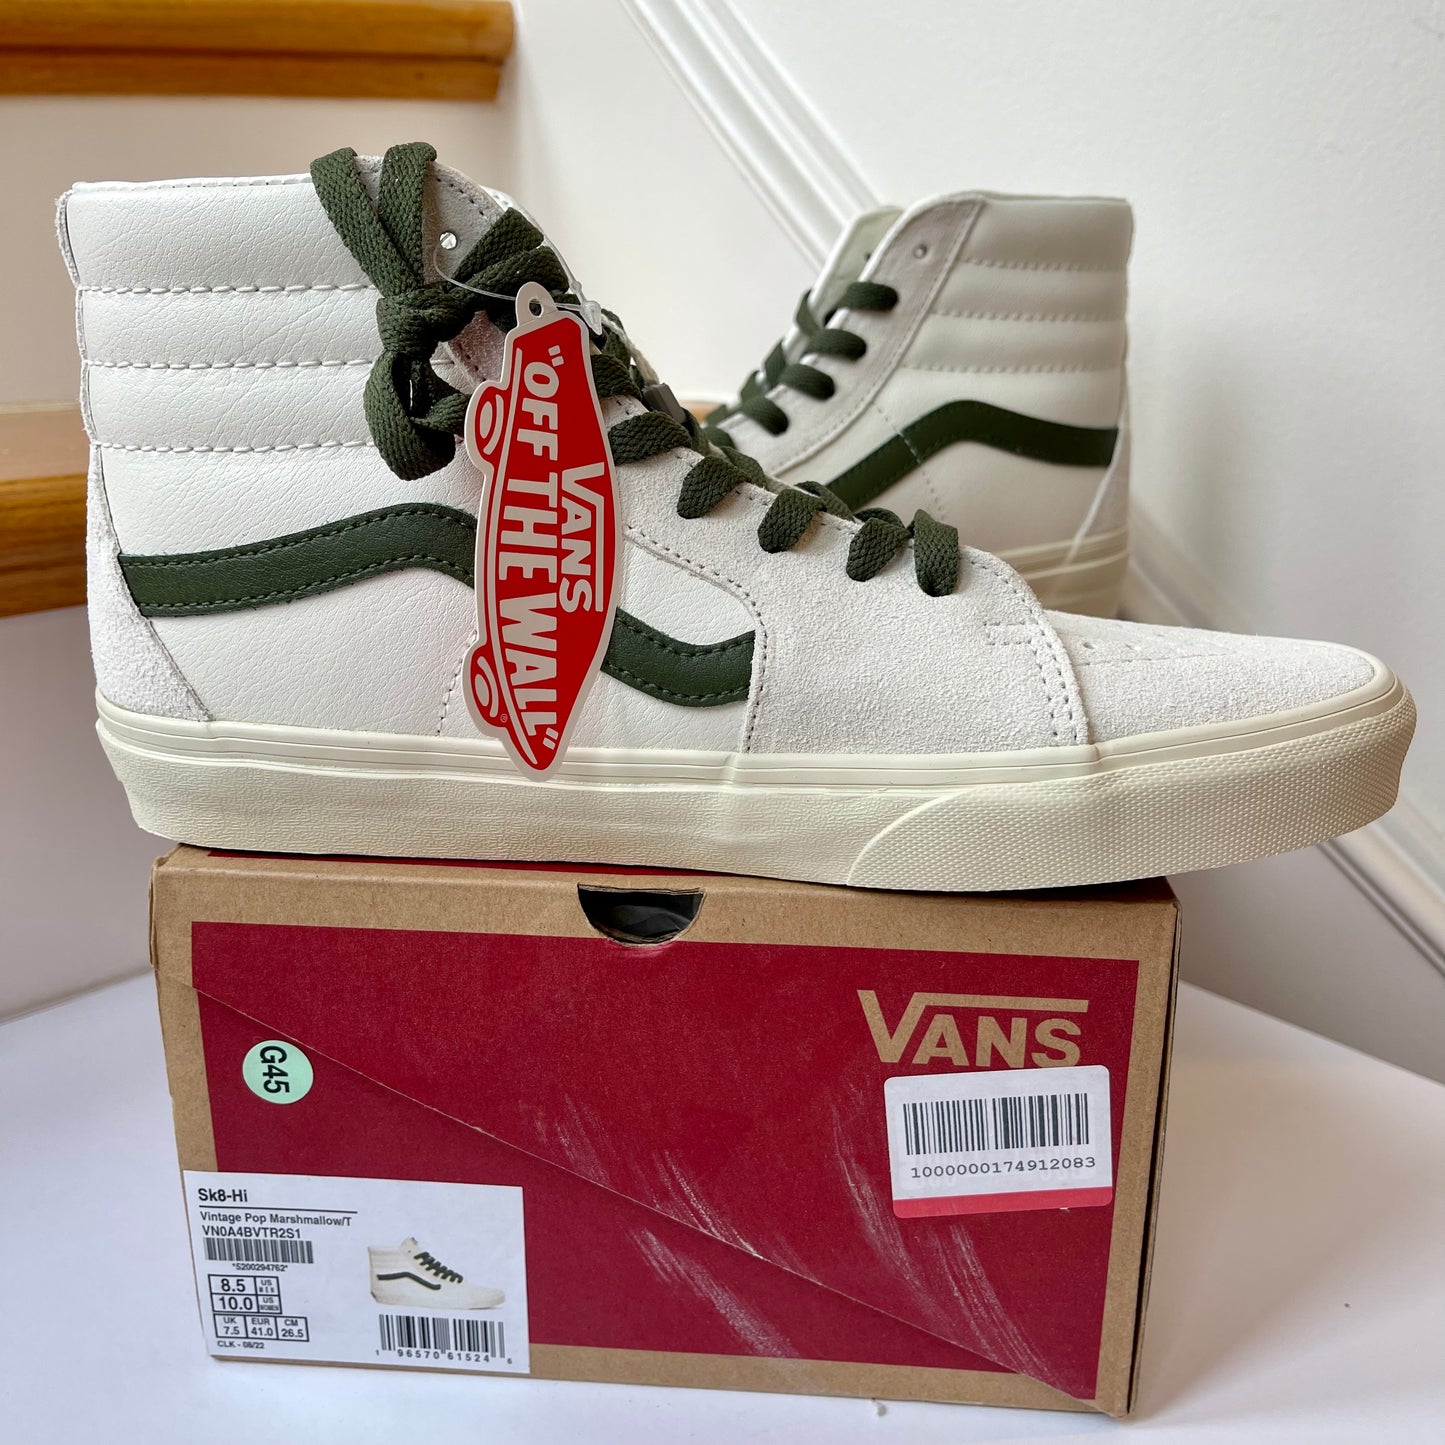 Vans Sk8 Hi Leather Sneakers in Vintage Pop - Marshmallow Turtledove